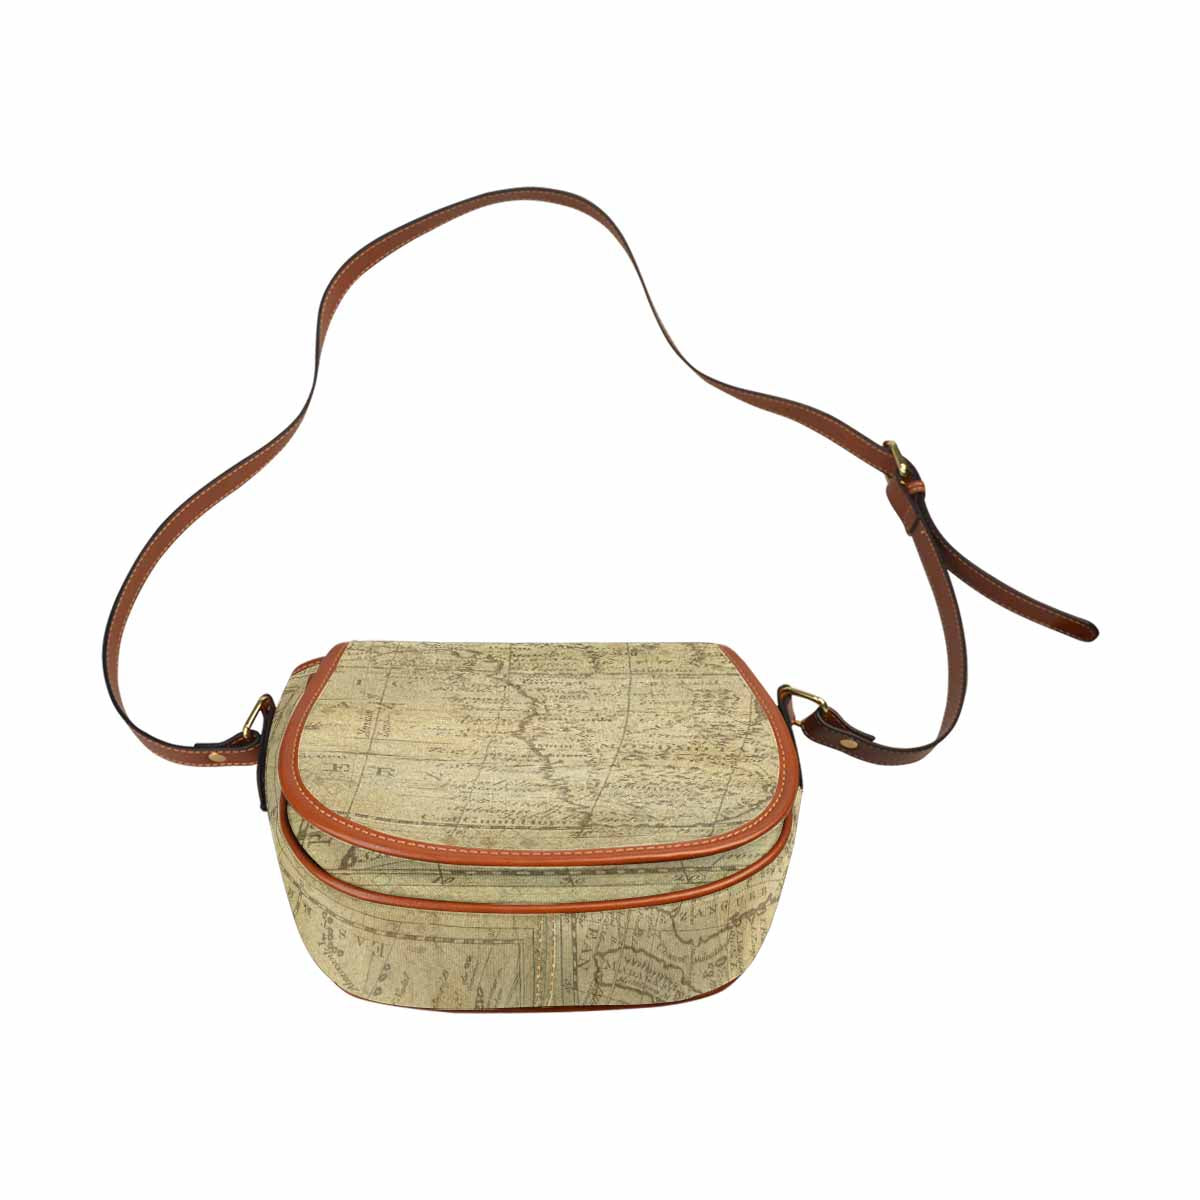 Antique Map design Handbag, saddle bag, Design 1